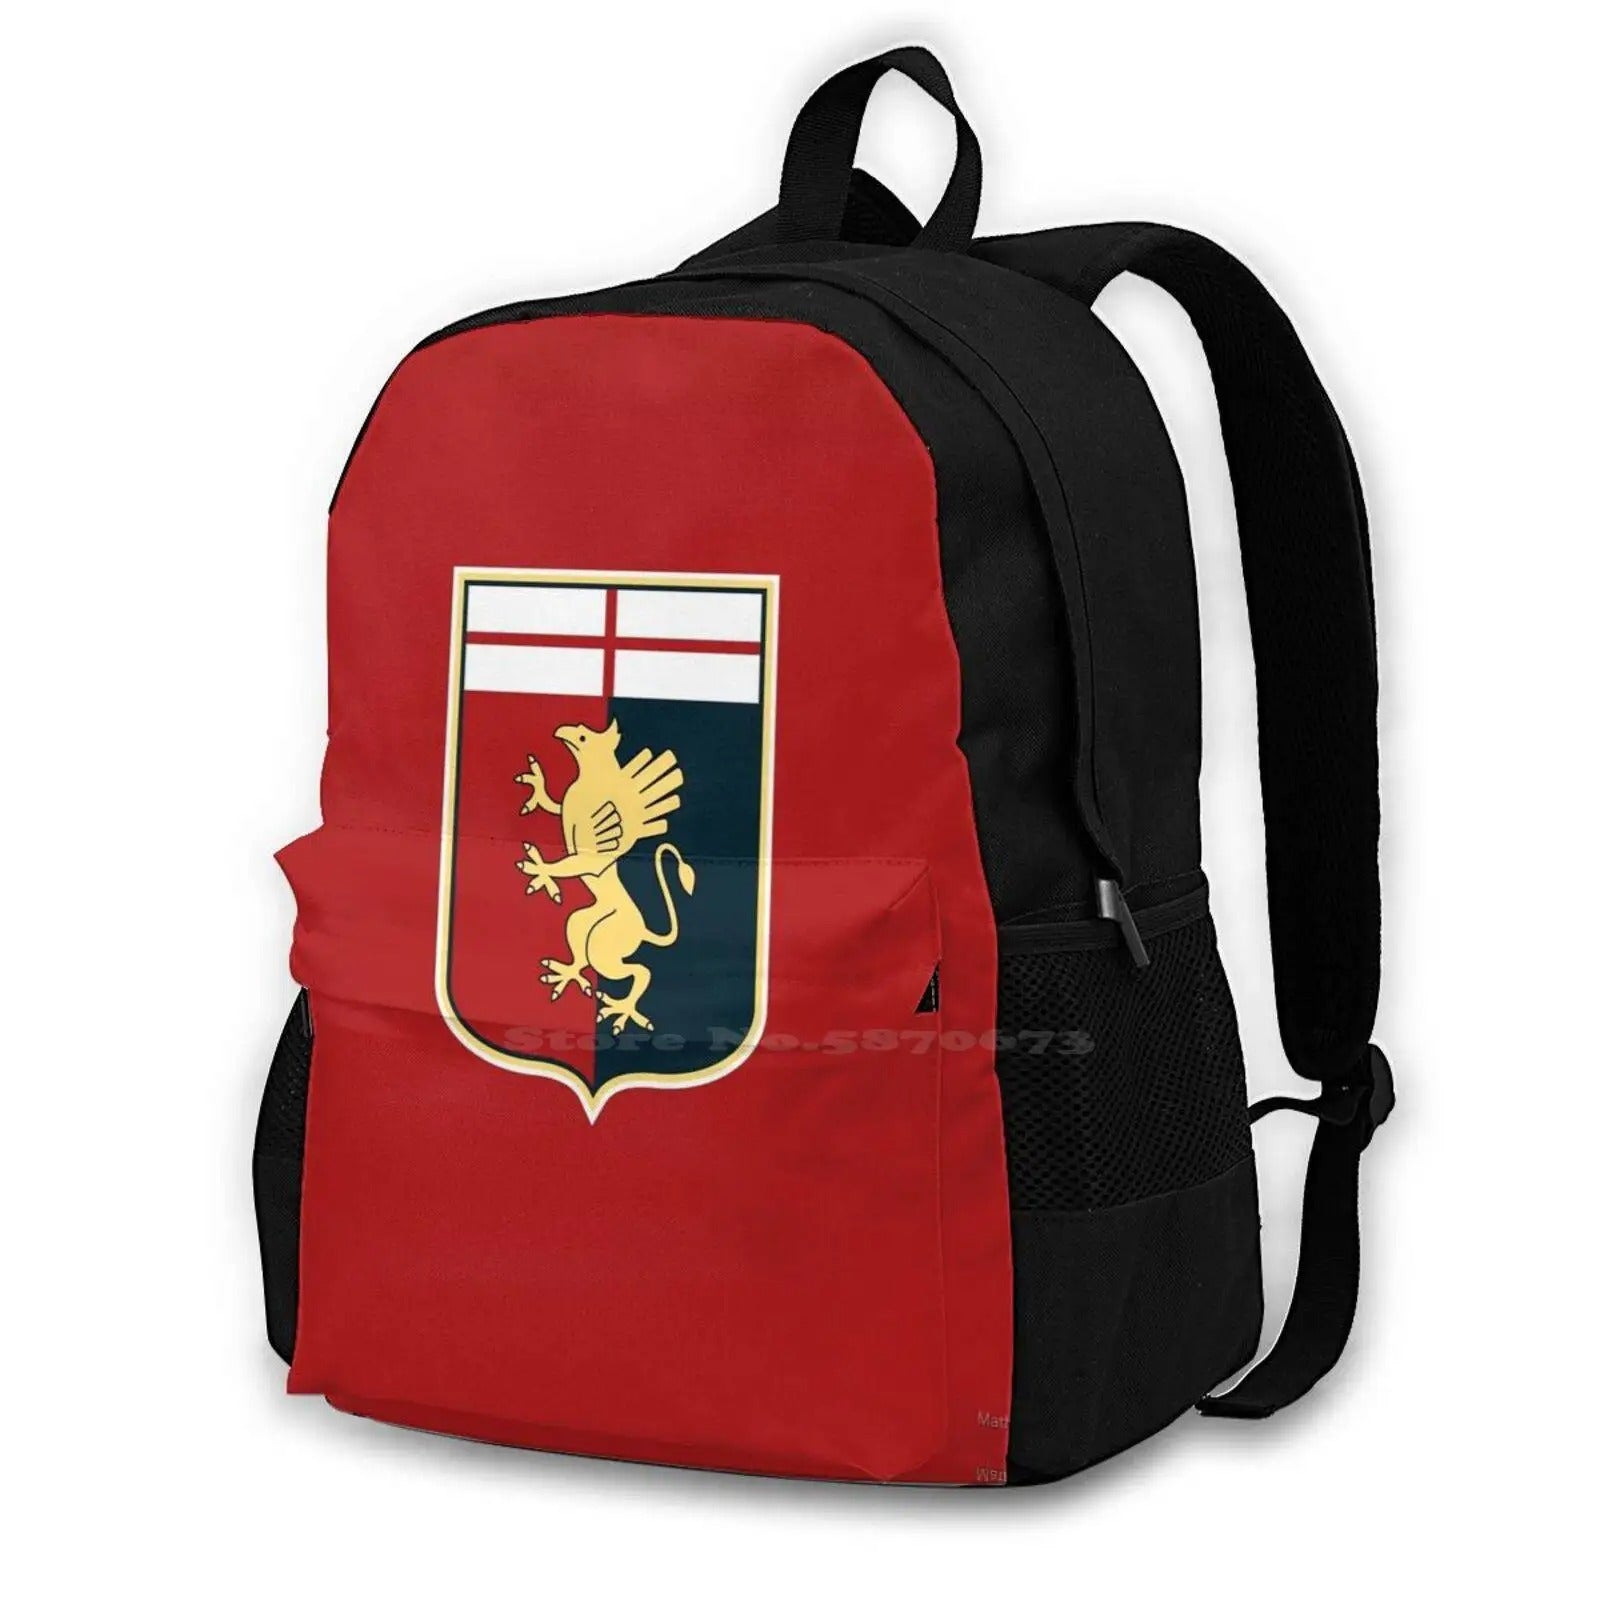 Italy Soccer Backpack - Backpack - Black